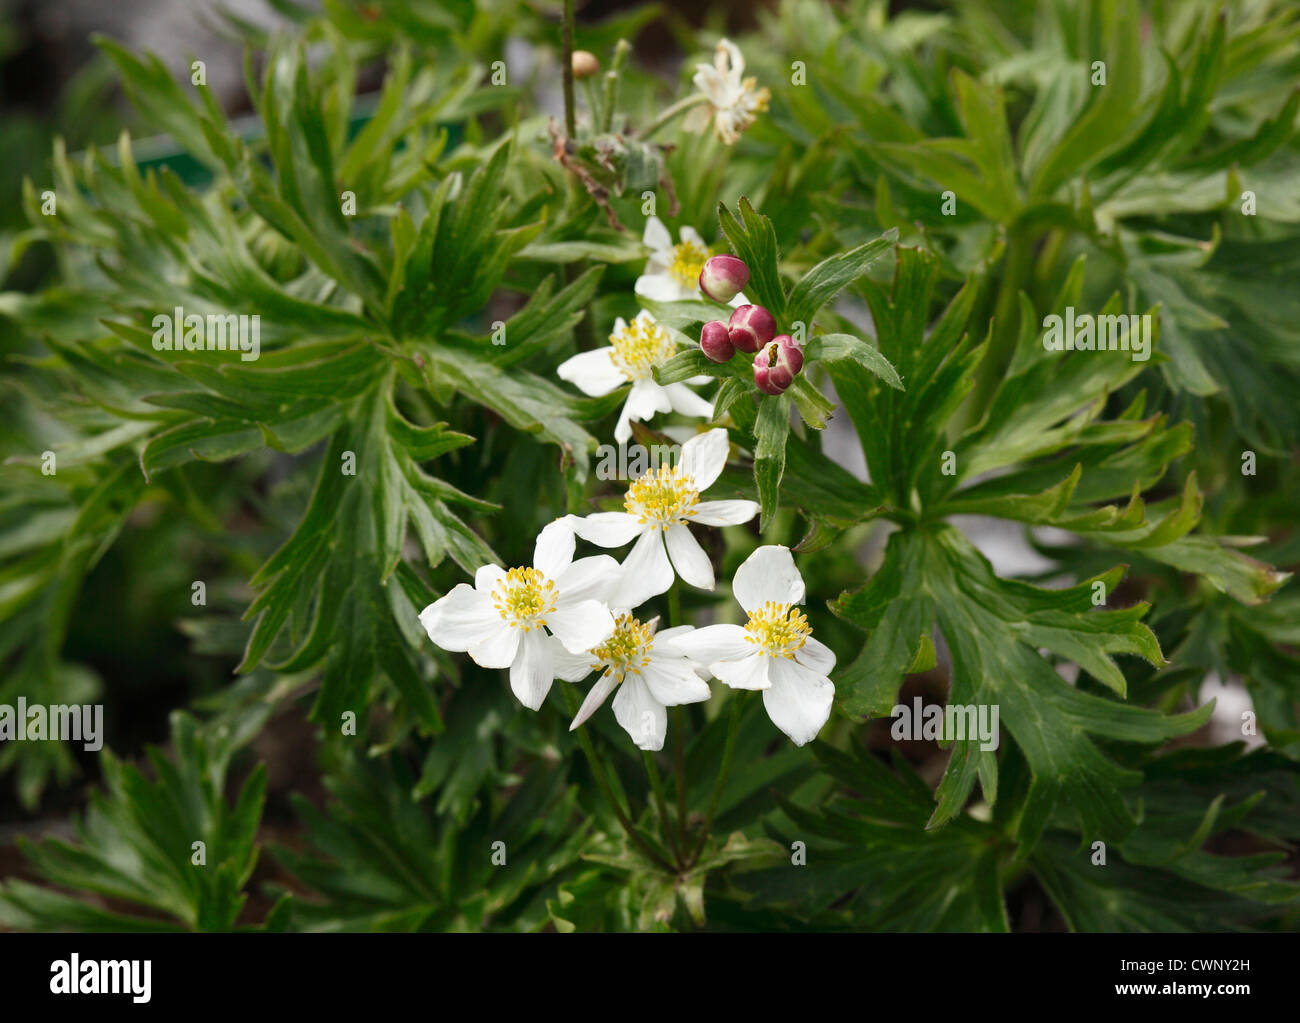 Austria, Styria, Narcissus flowered anemone, close up Stock Photo